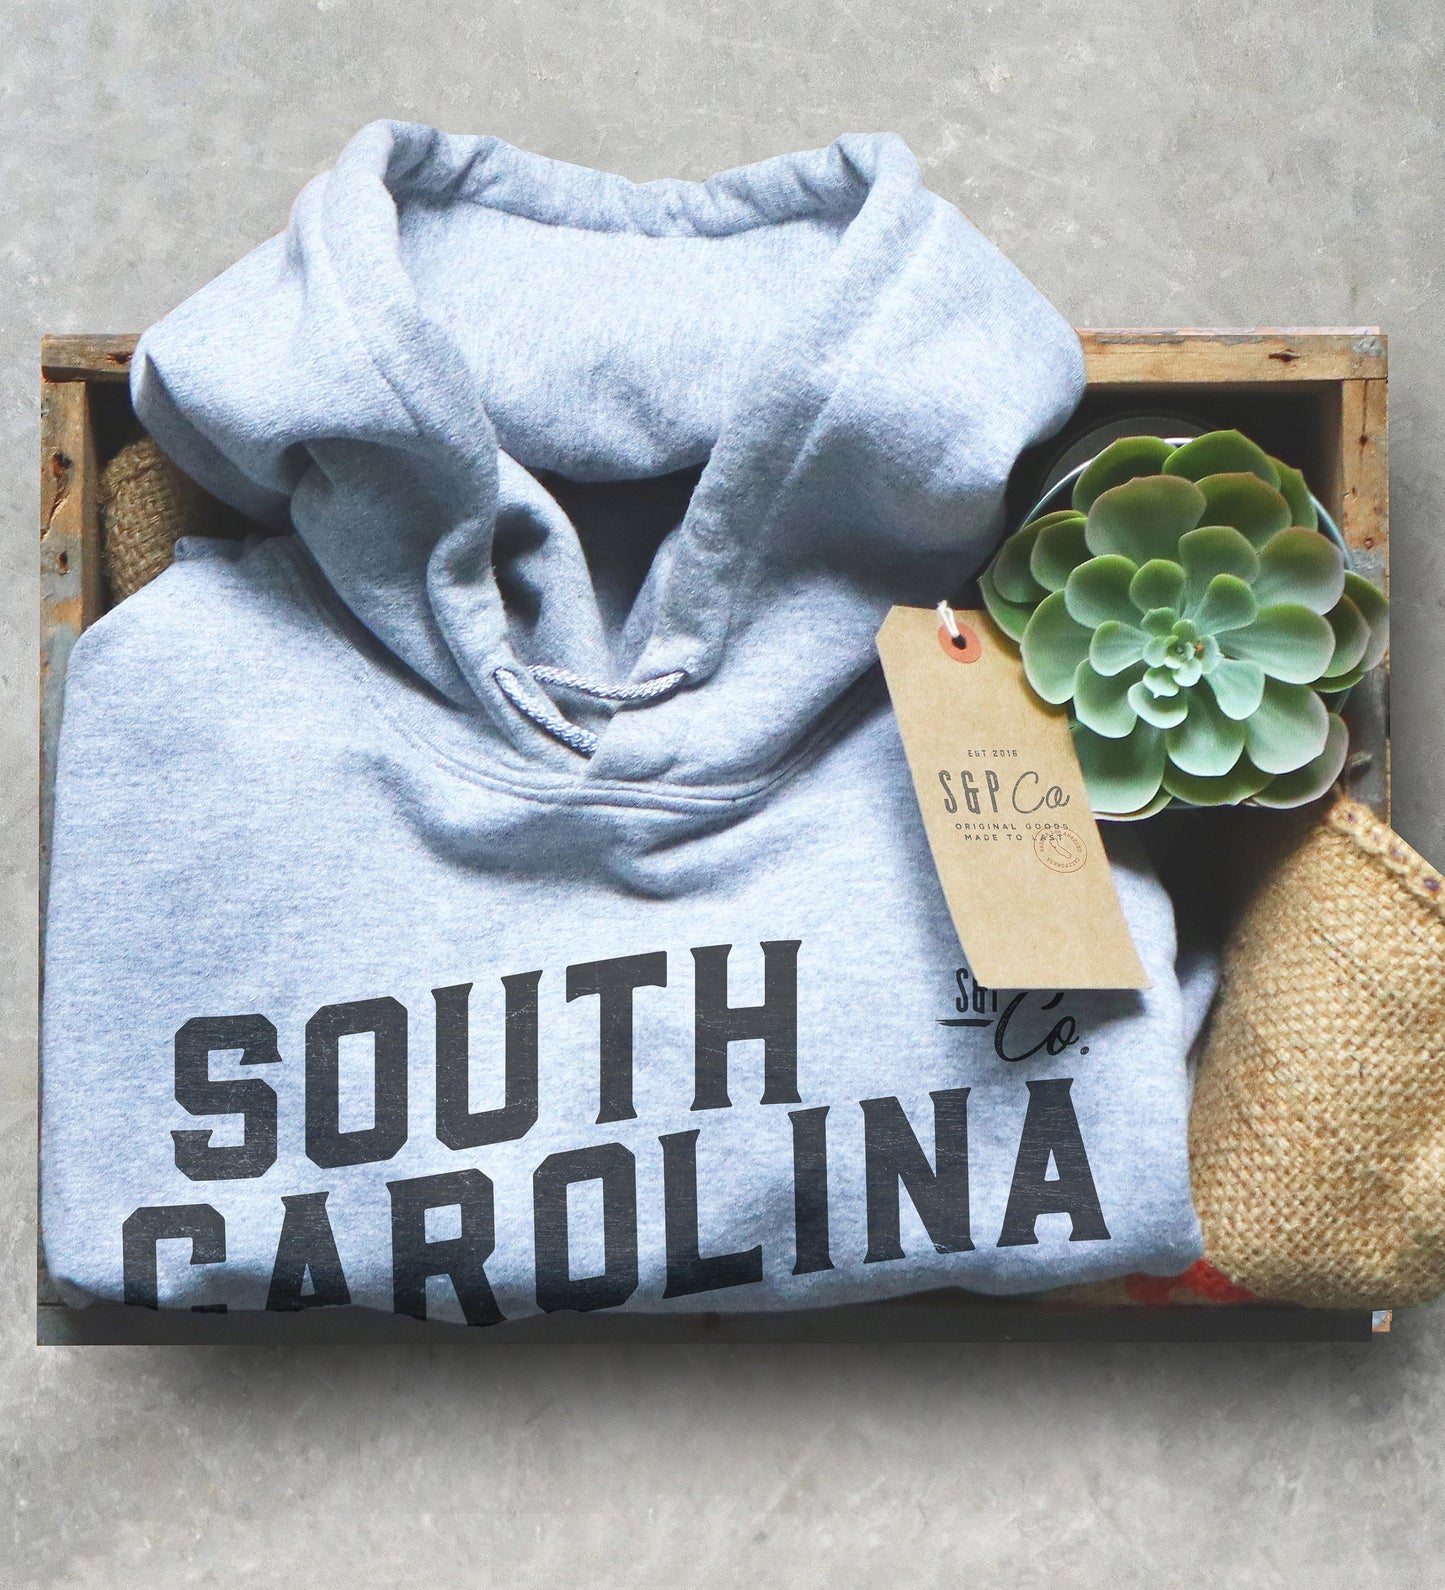 South Carolina Hoodie - South